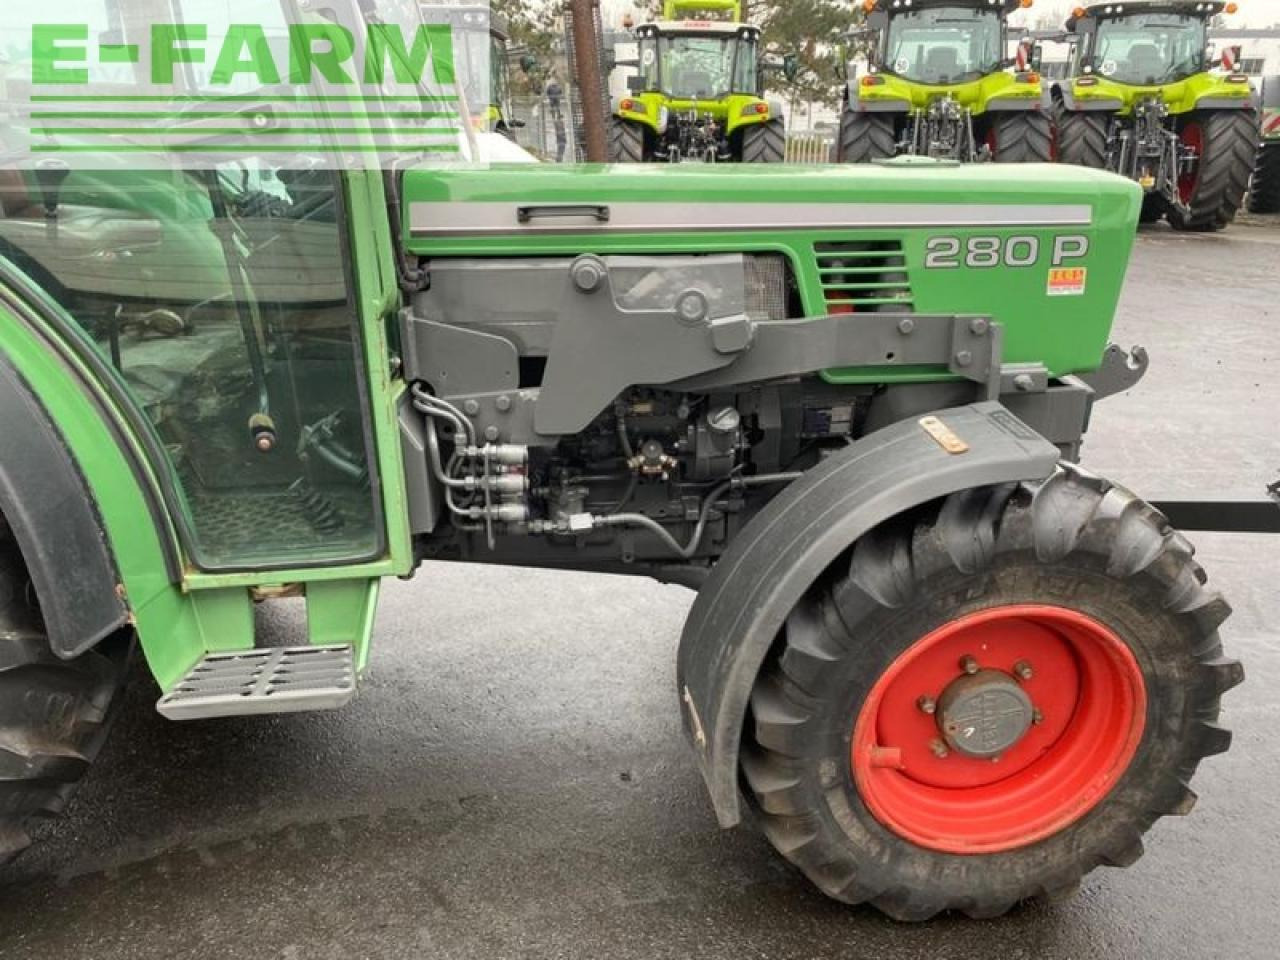 Farm tractor Fendt 280 p: picture 6